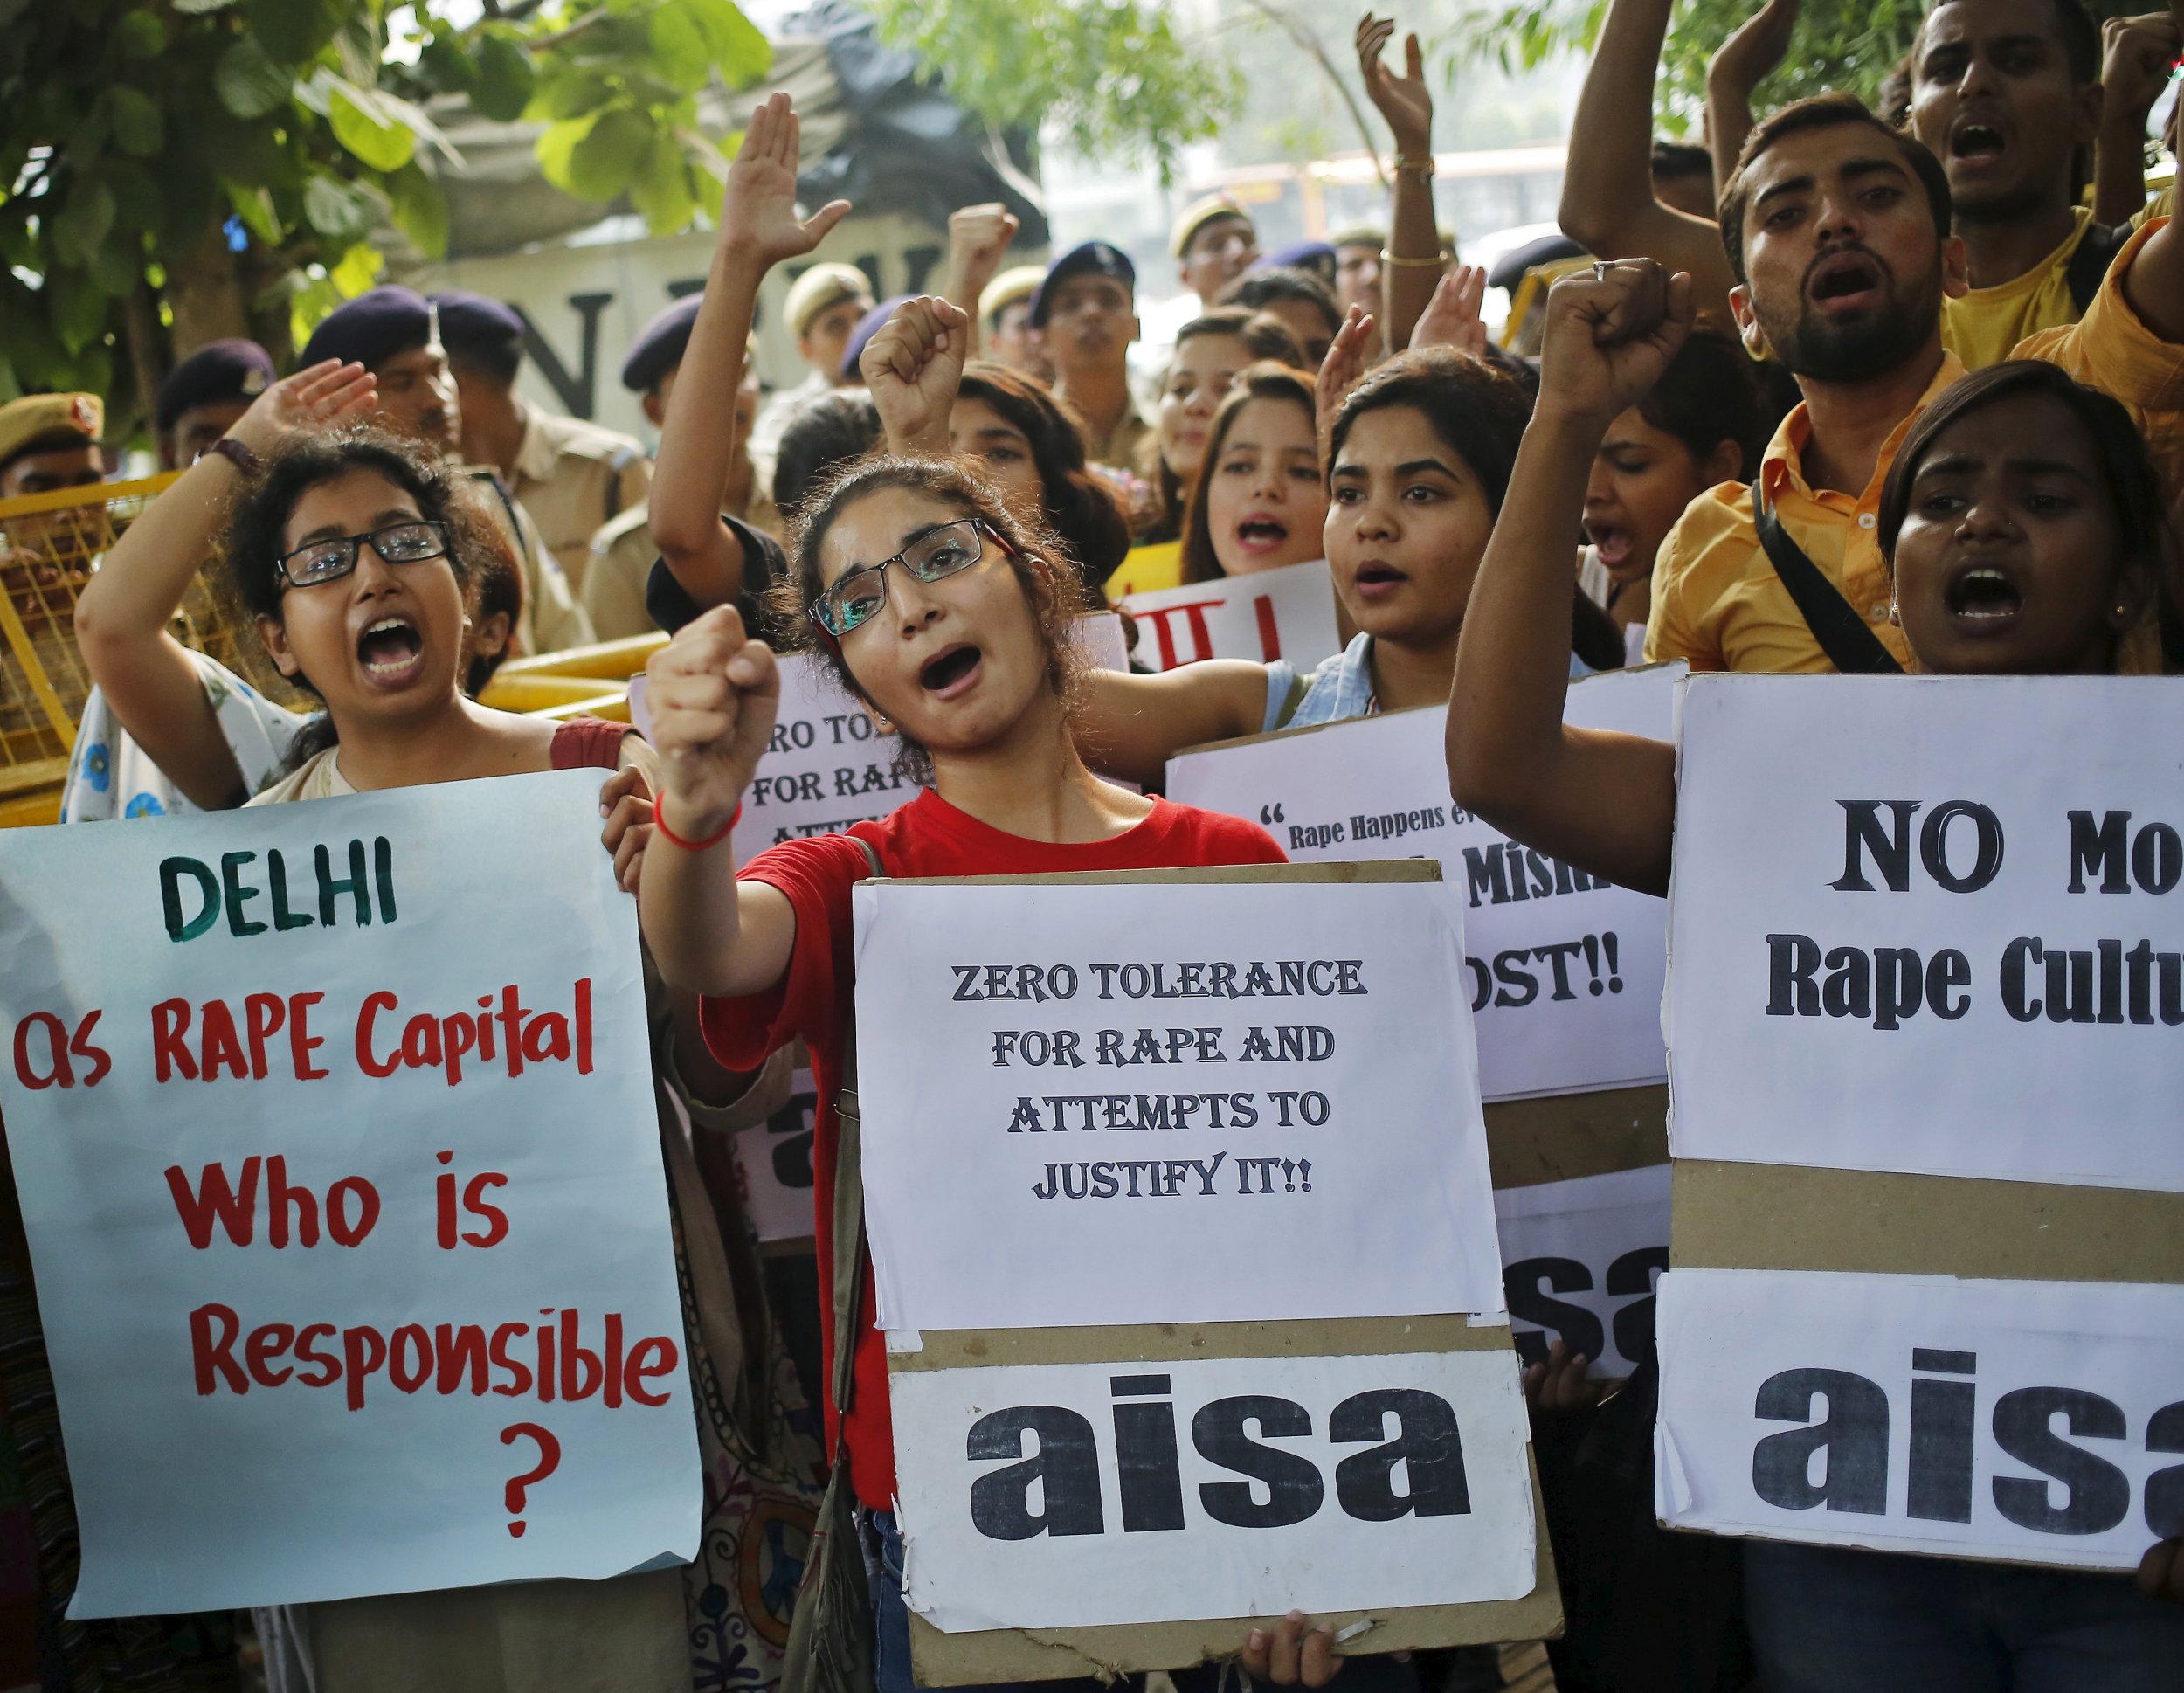 4-27-16 India rape protest